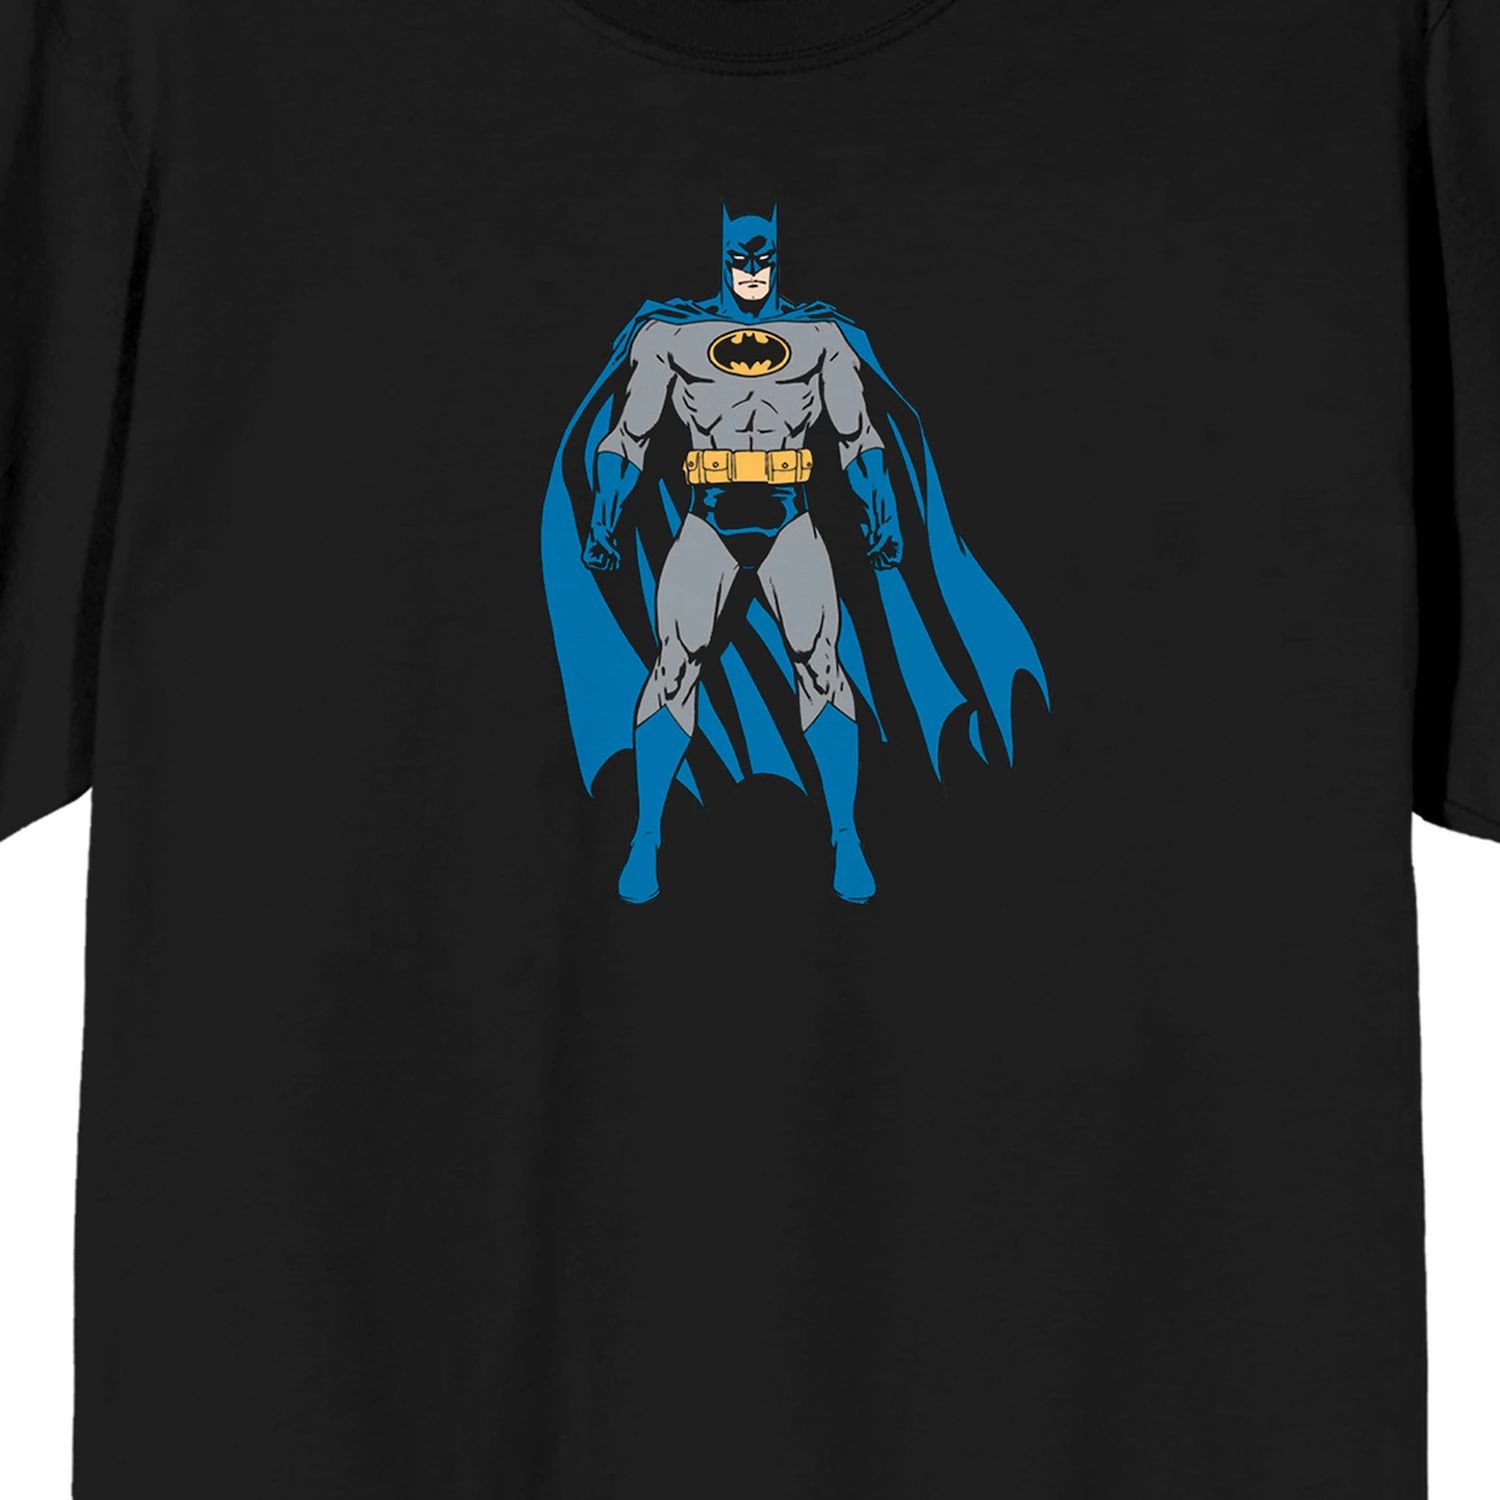 Мужская футболка с изображением Бэтмена и супергероя Power Pose Licensed Character